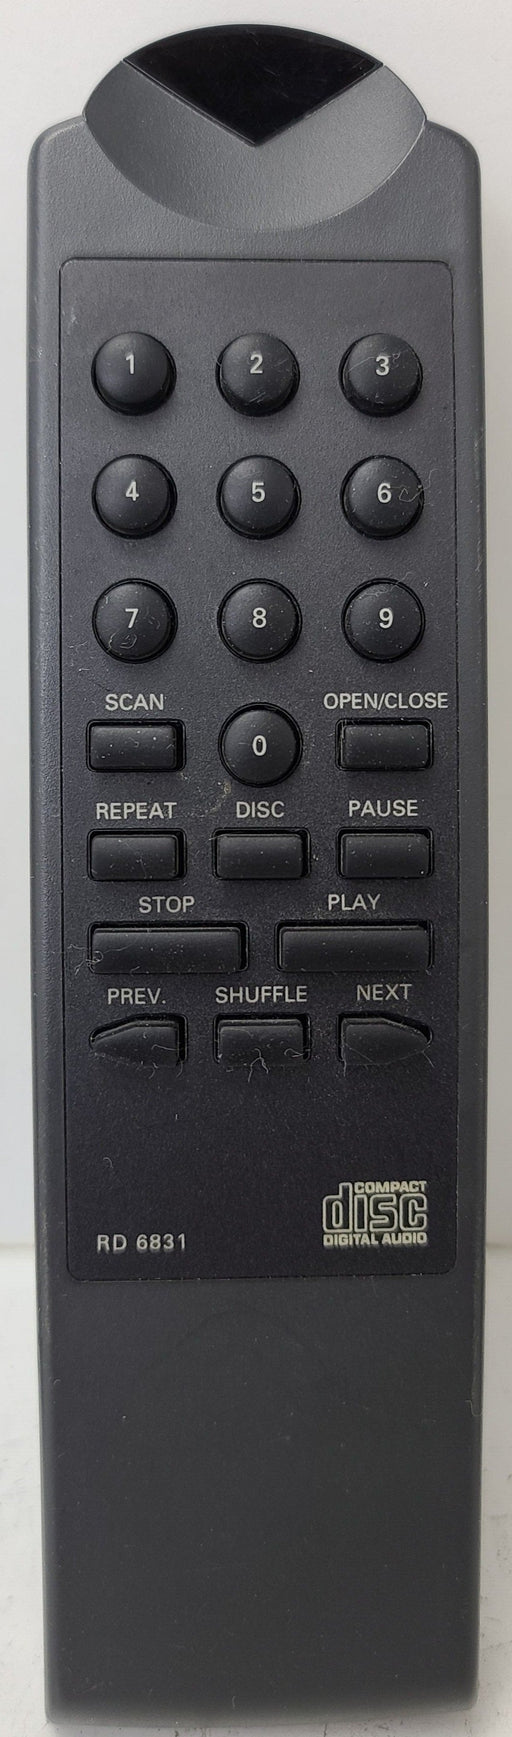 Magnavox RD 6831 Remote Control for CD Player Model CDC-796/17-Remote-SpenCertified-refurbished-vintage-electonics